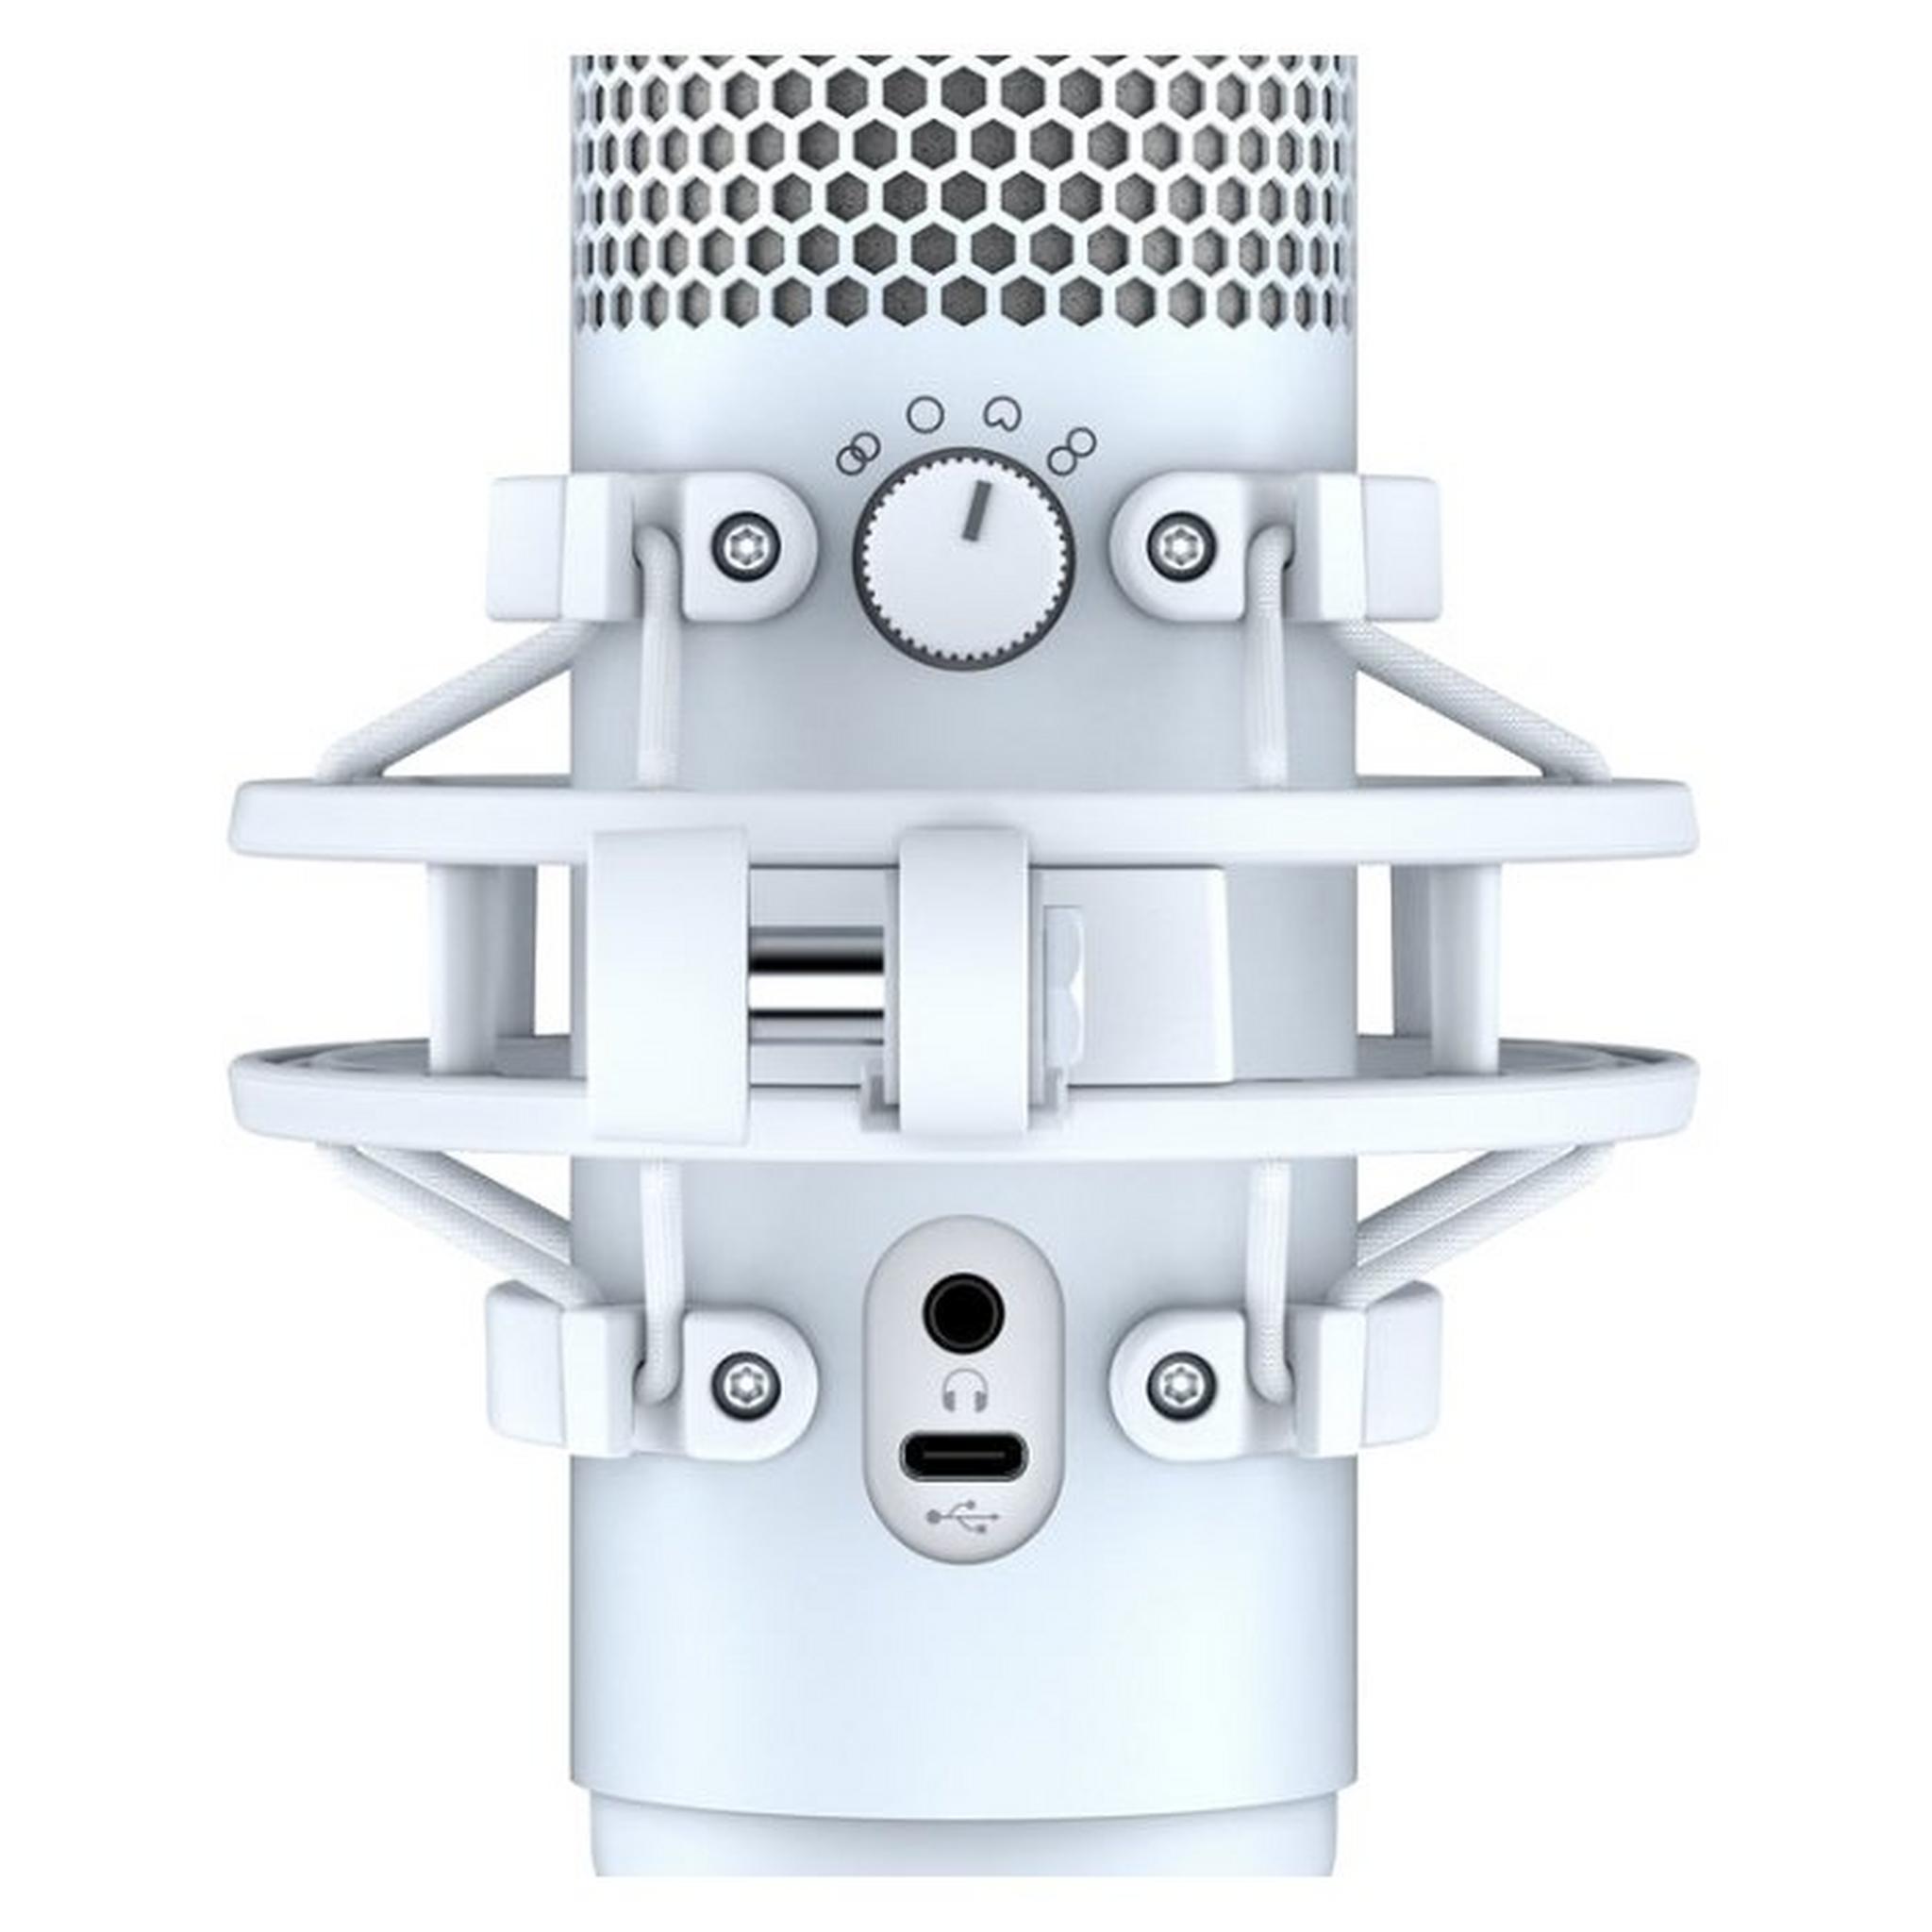 HyperX QuadCast S - USB Microphone White